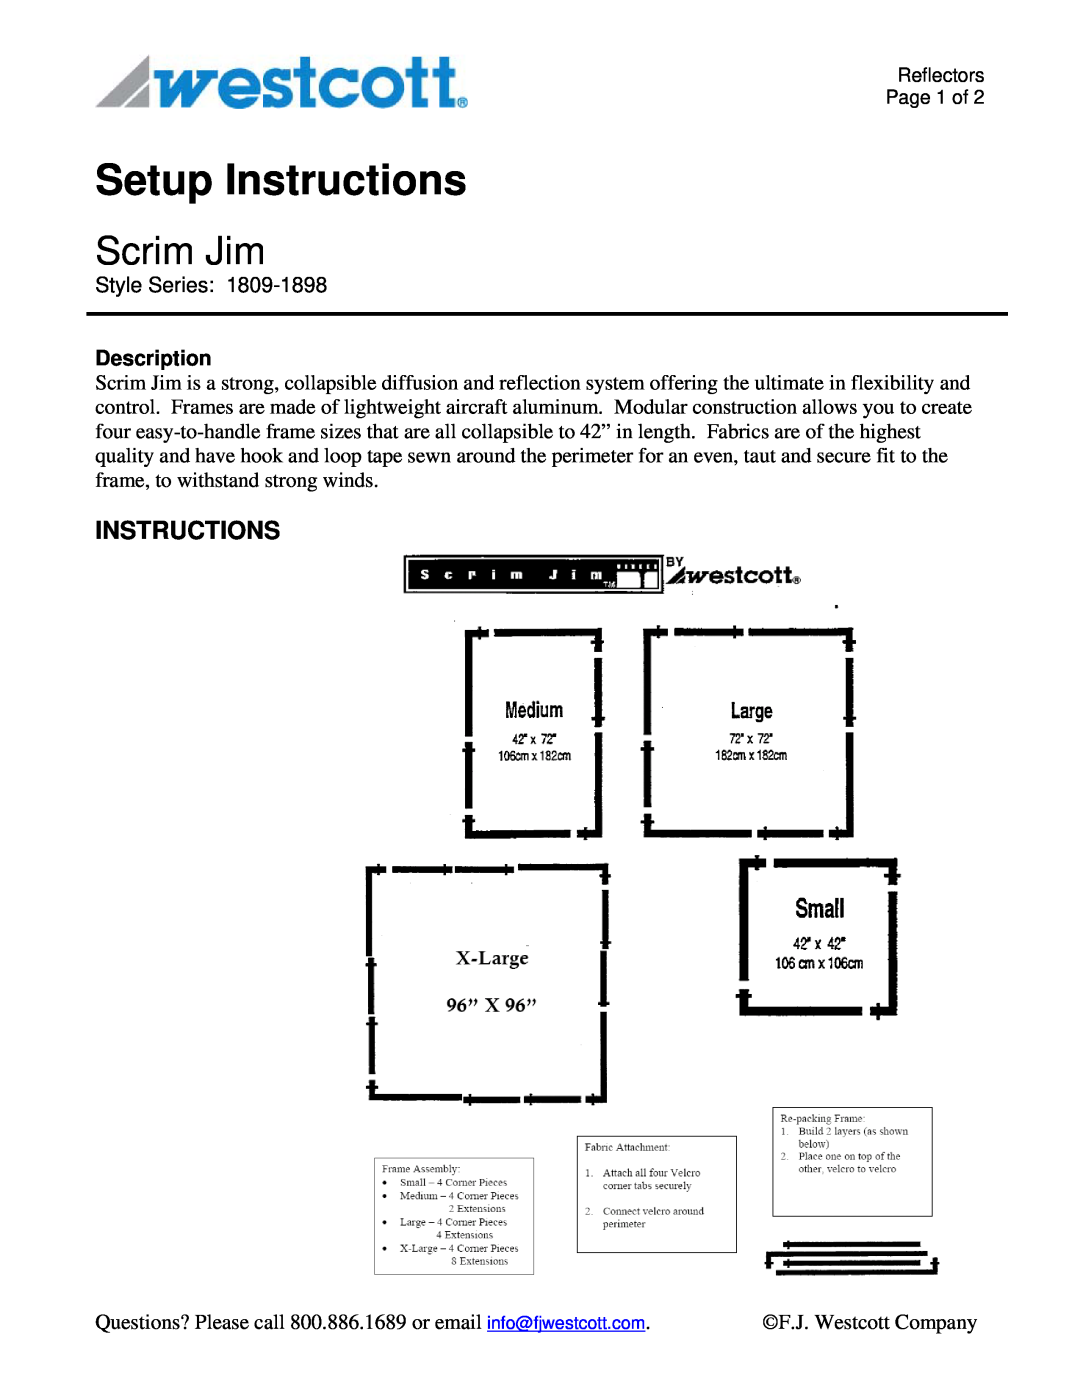 Westcott 1858 manual Setup Instructions, Scrim Jim, Description 